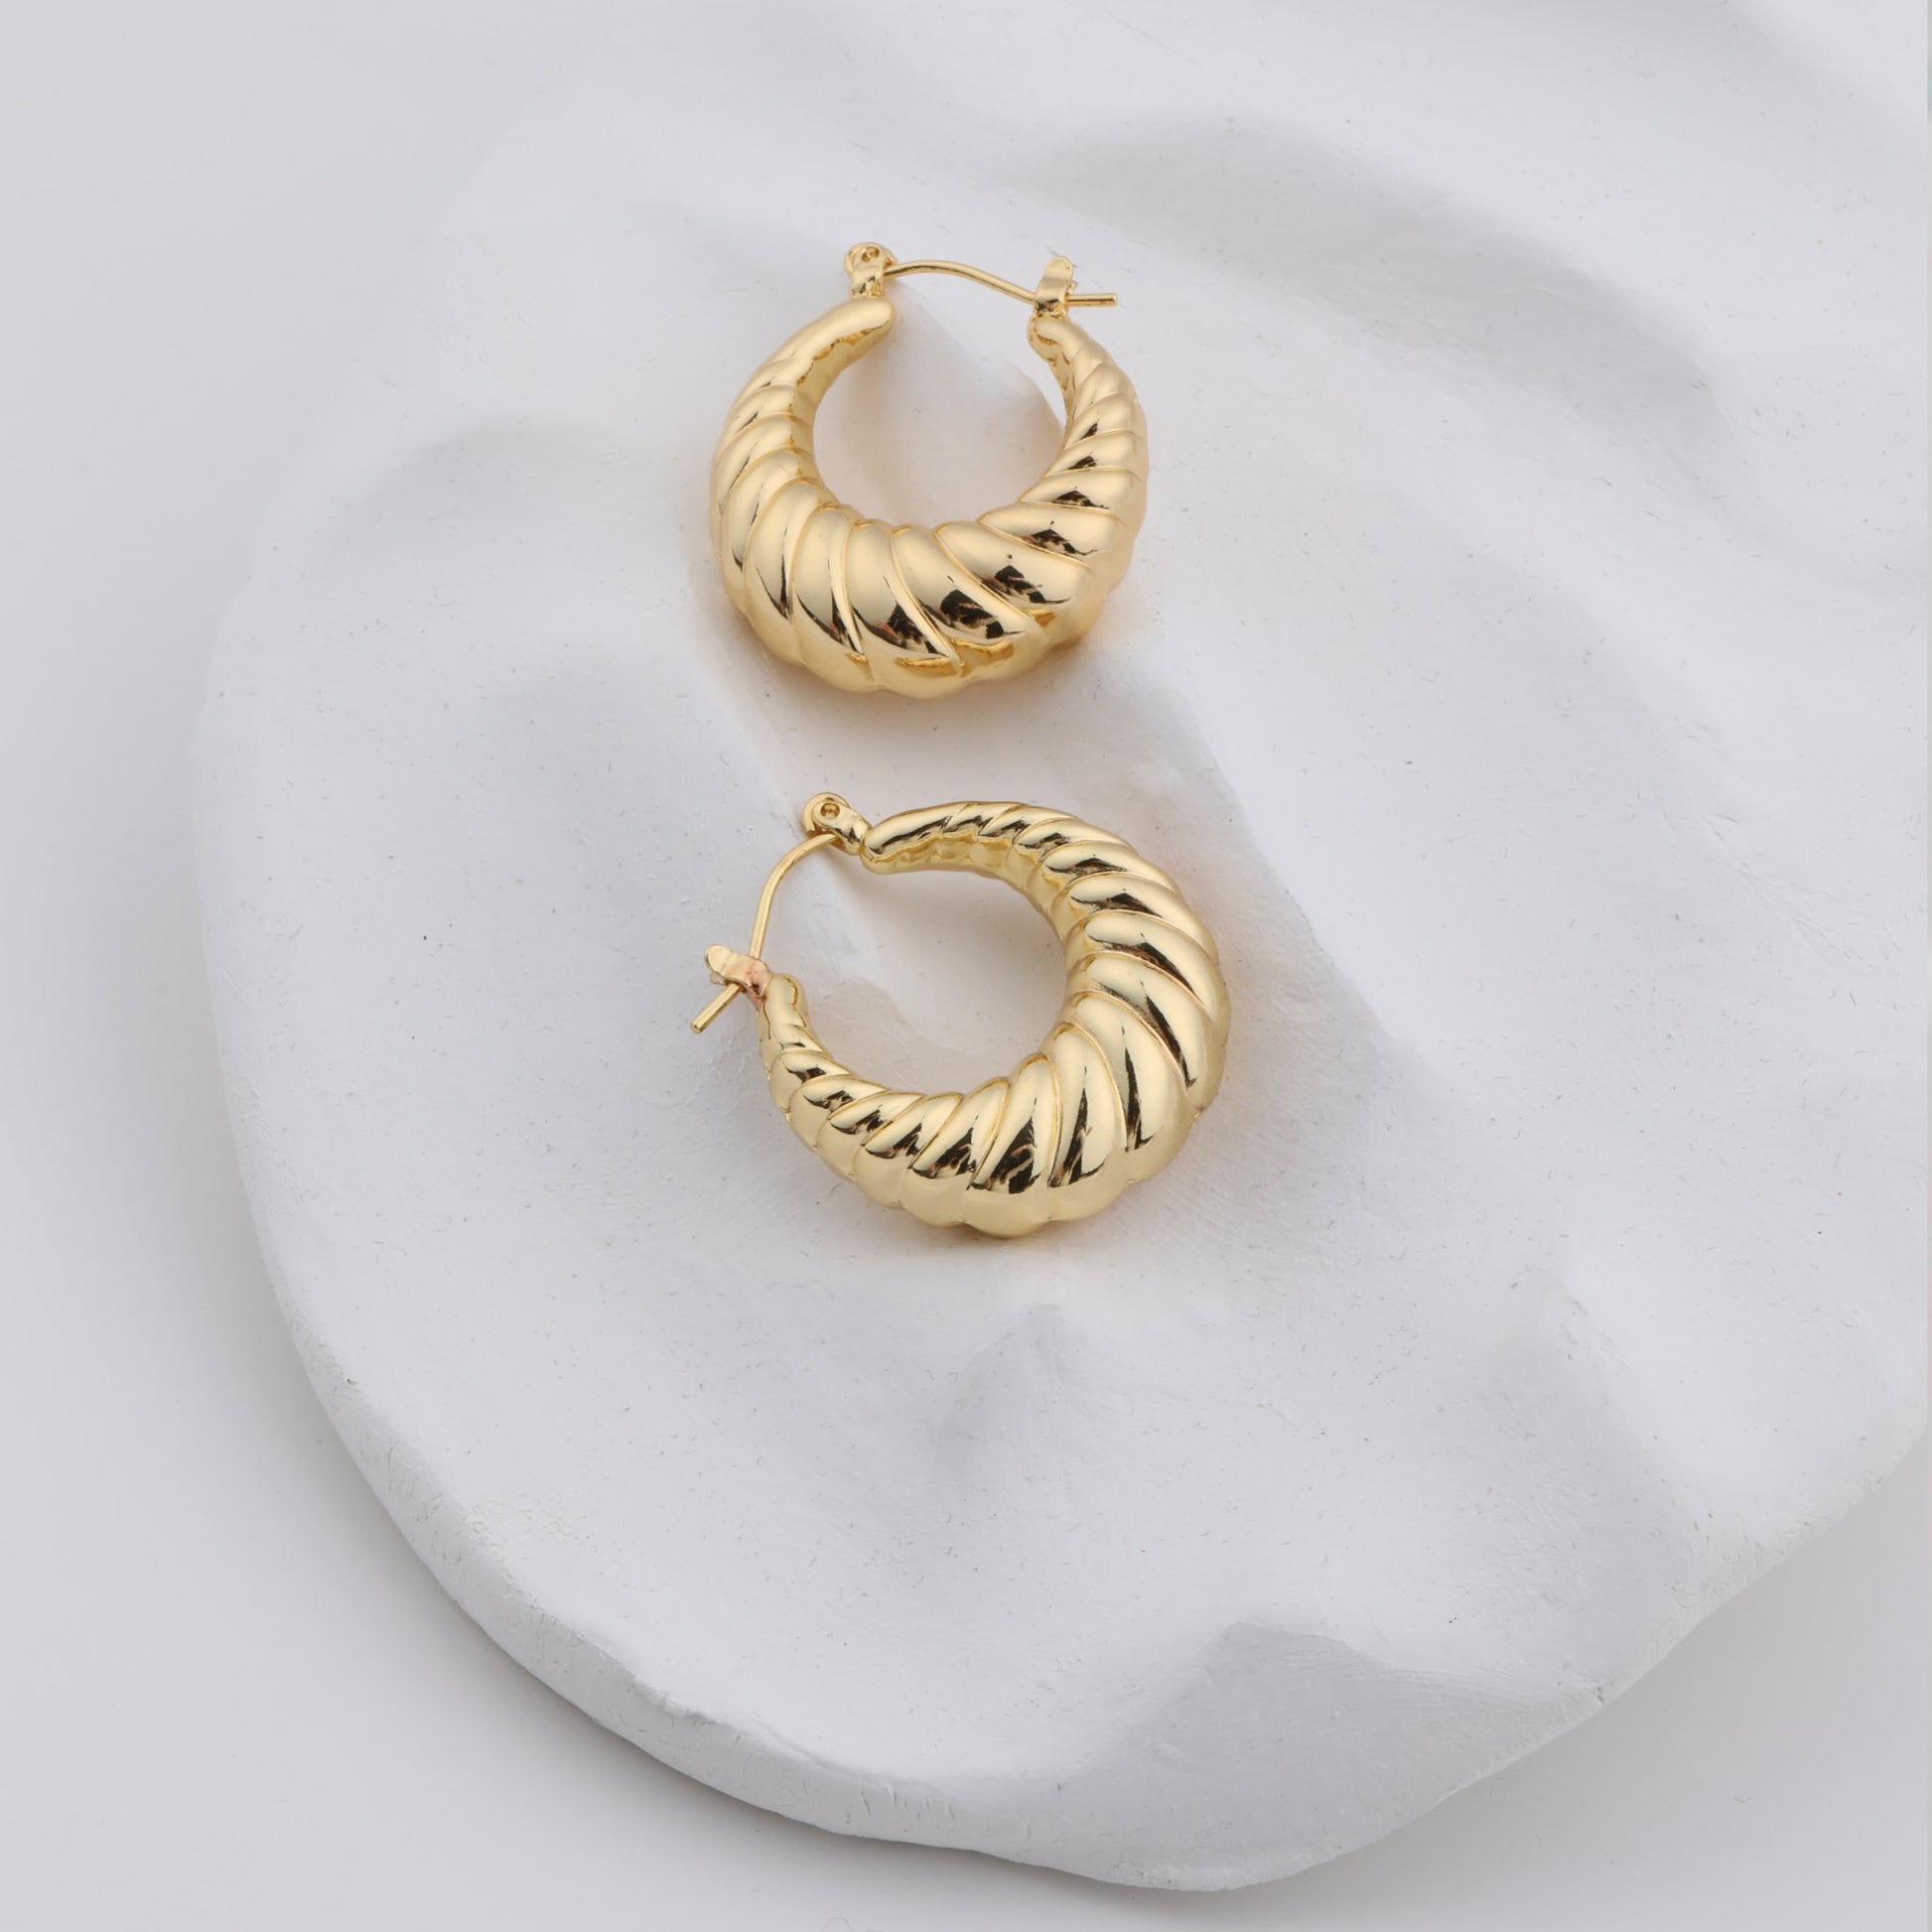 Croissant Gold Hoop Earrings Lightweight for Daily use Waterproof Earrings - Moboduc Custom Jewelry